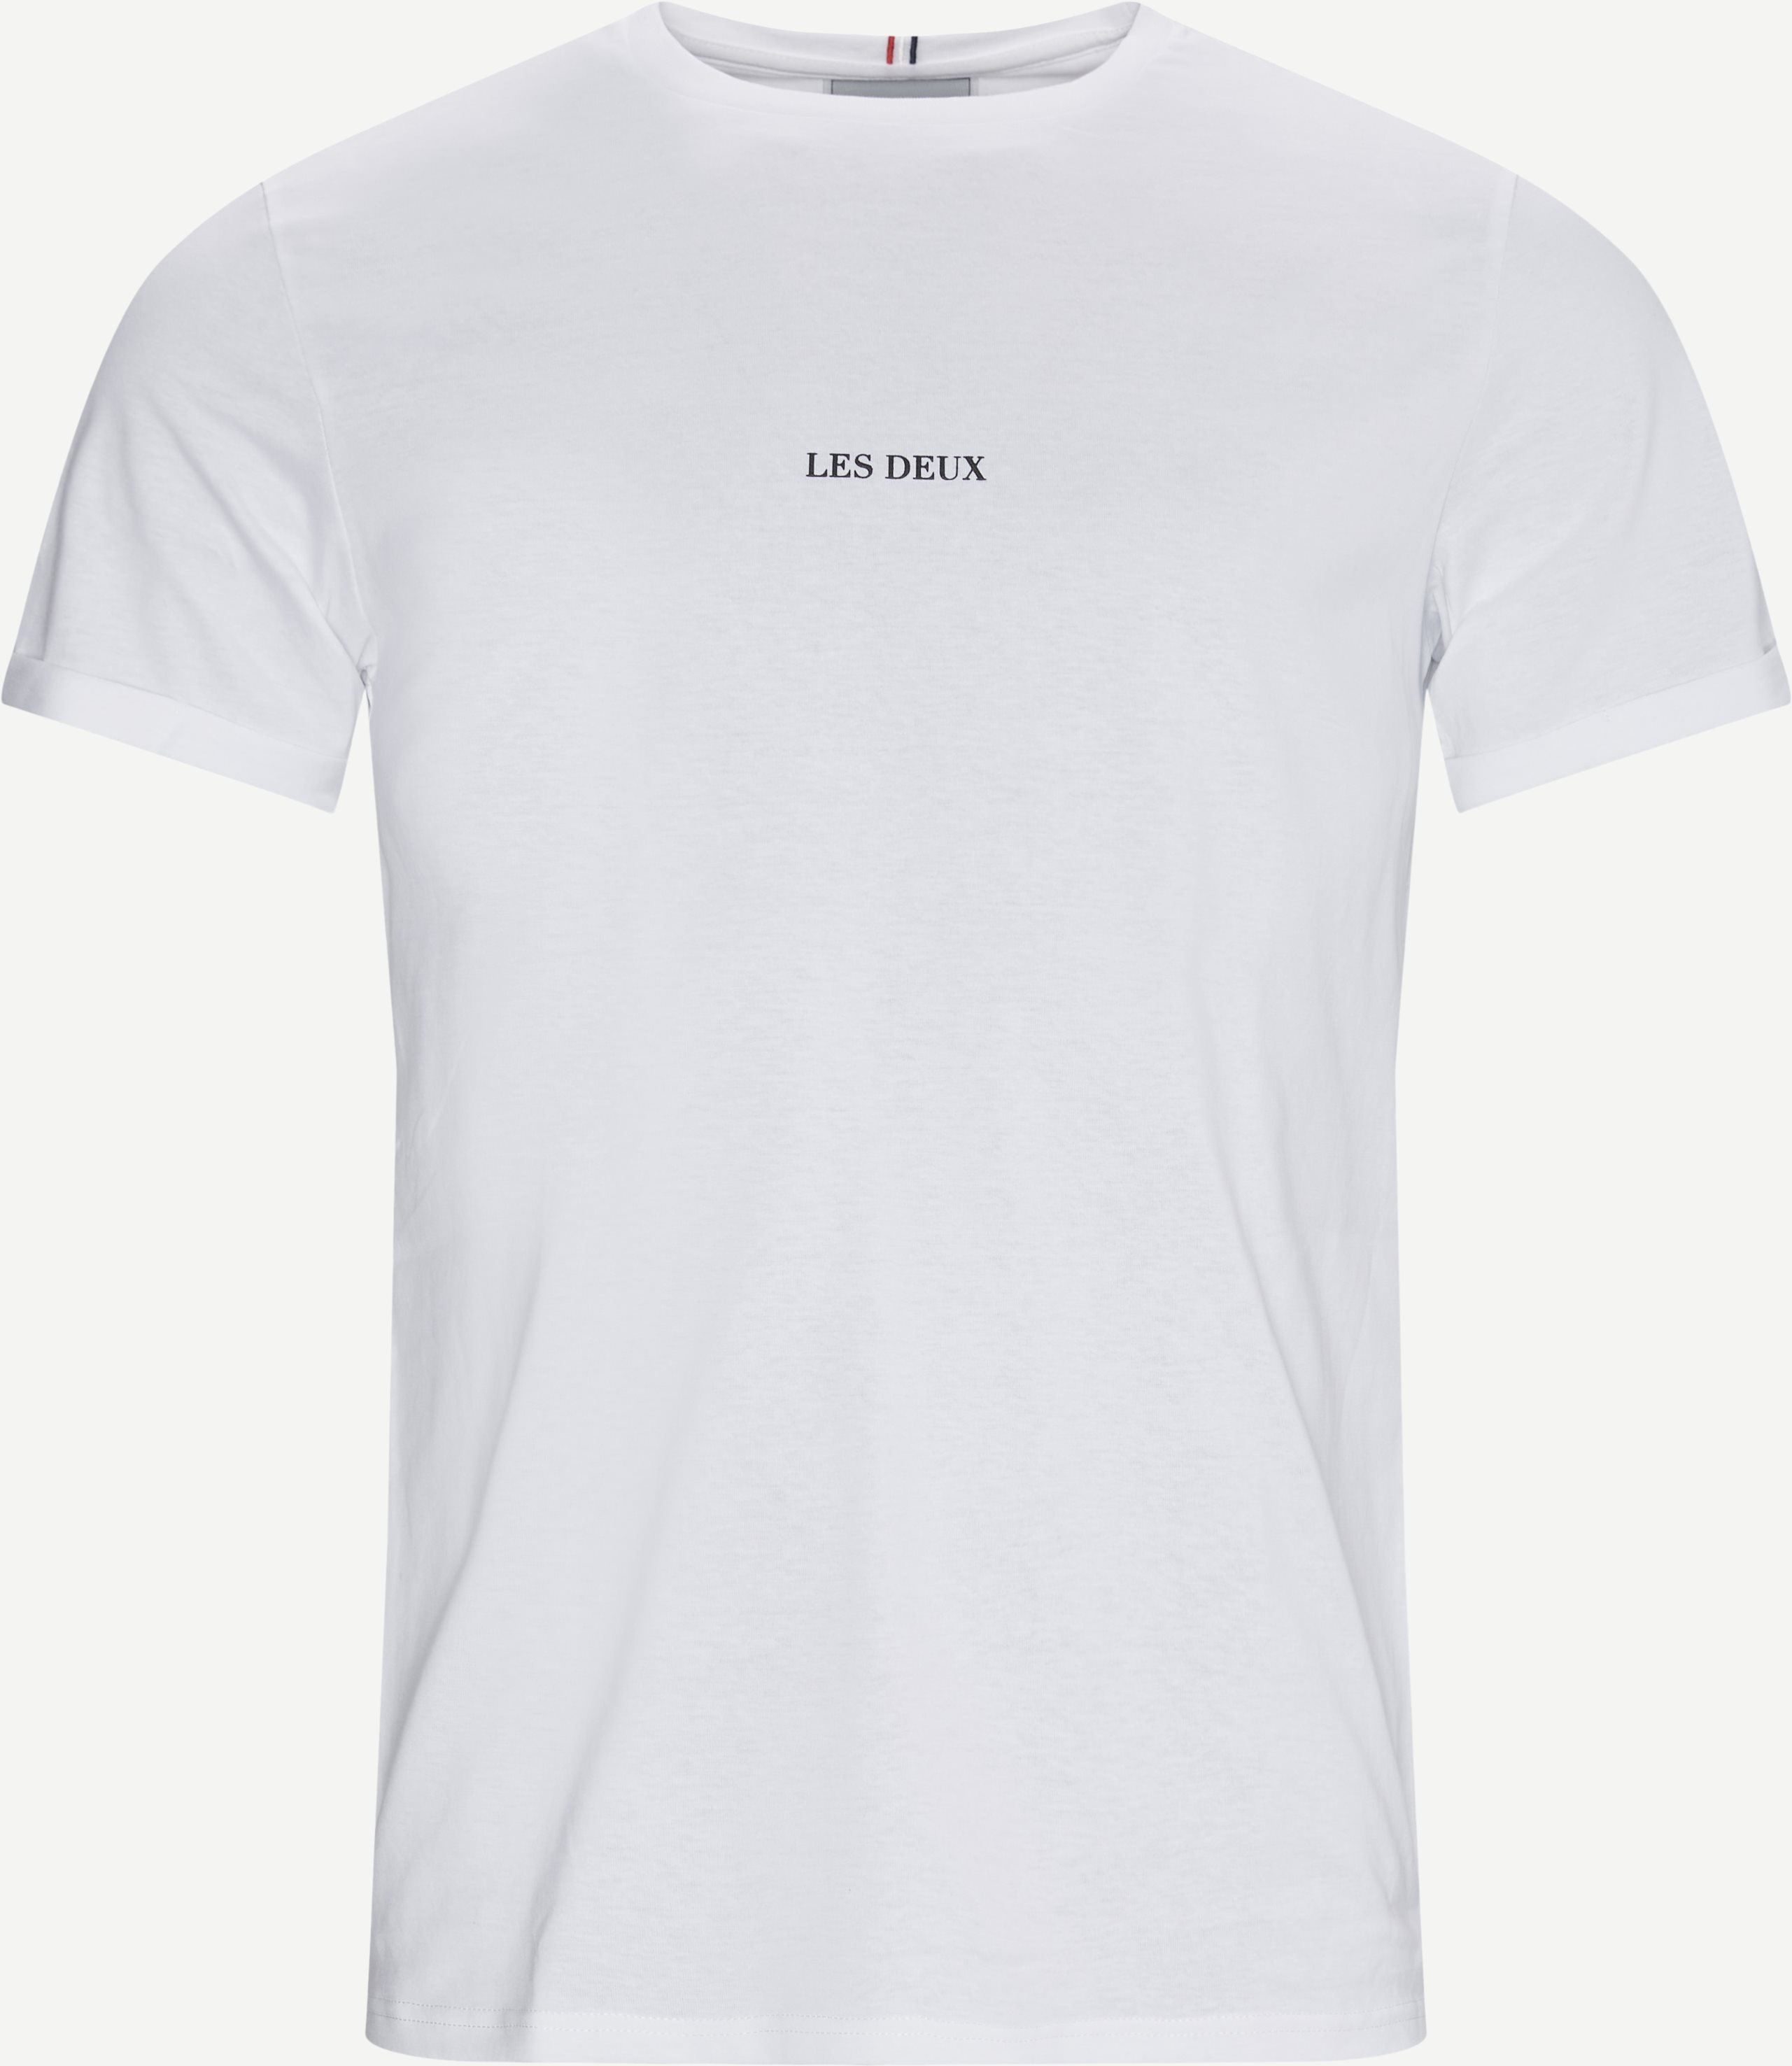 Lins T-shirt - T-shirts - Regular fit - Vit